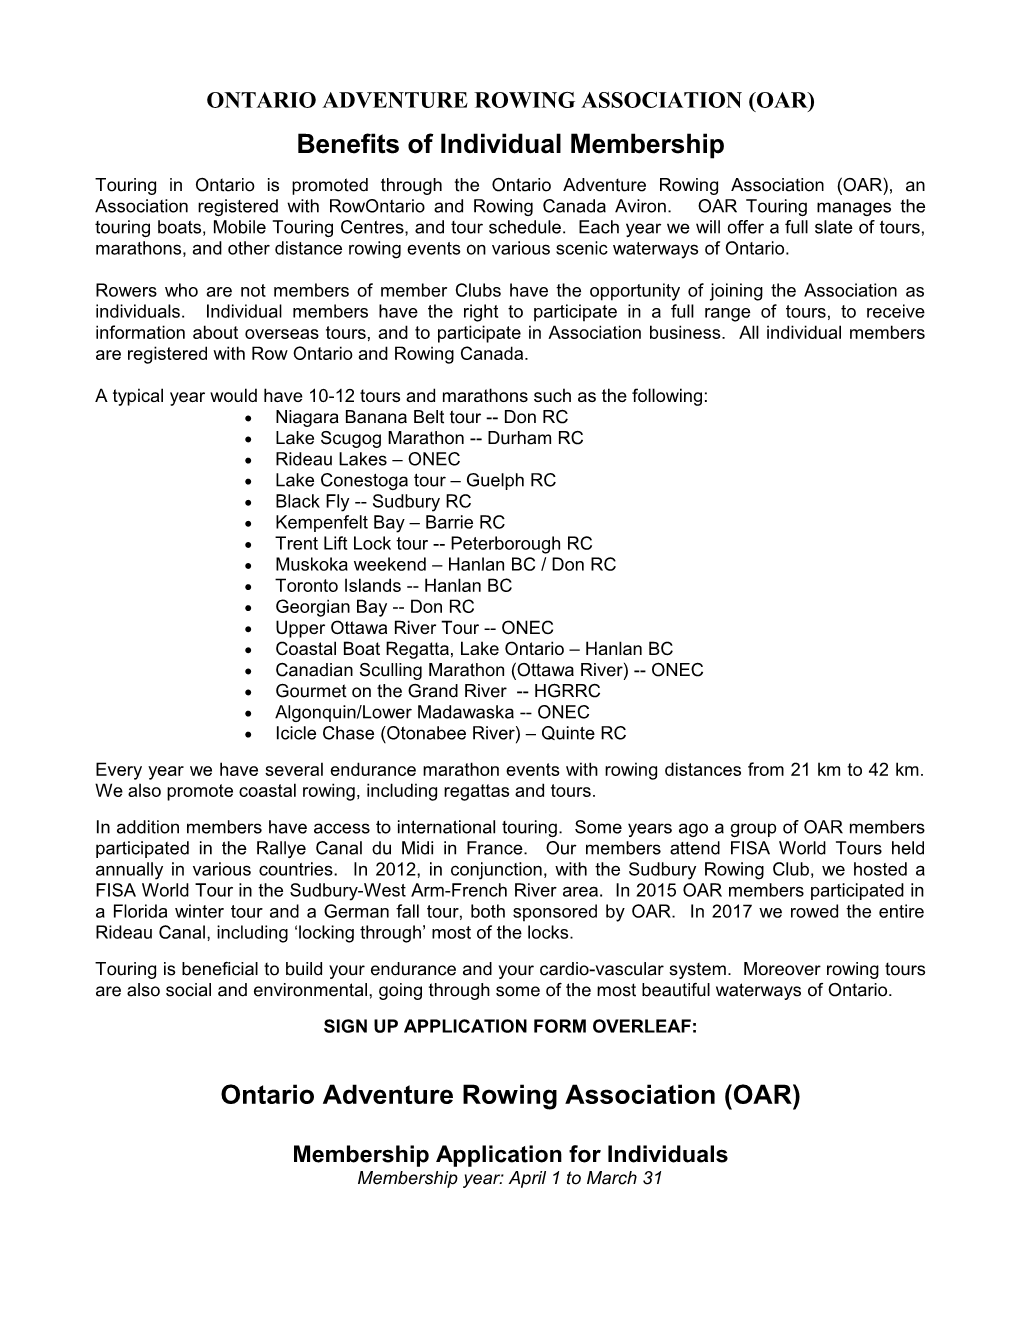 Ontario Adventure Rowing Association